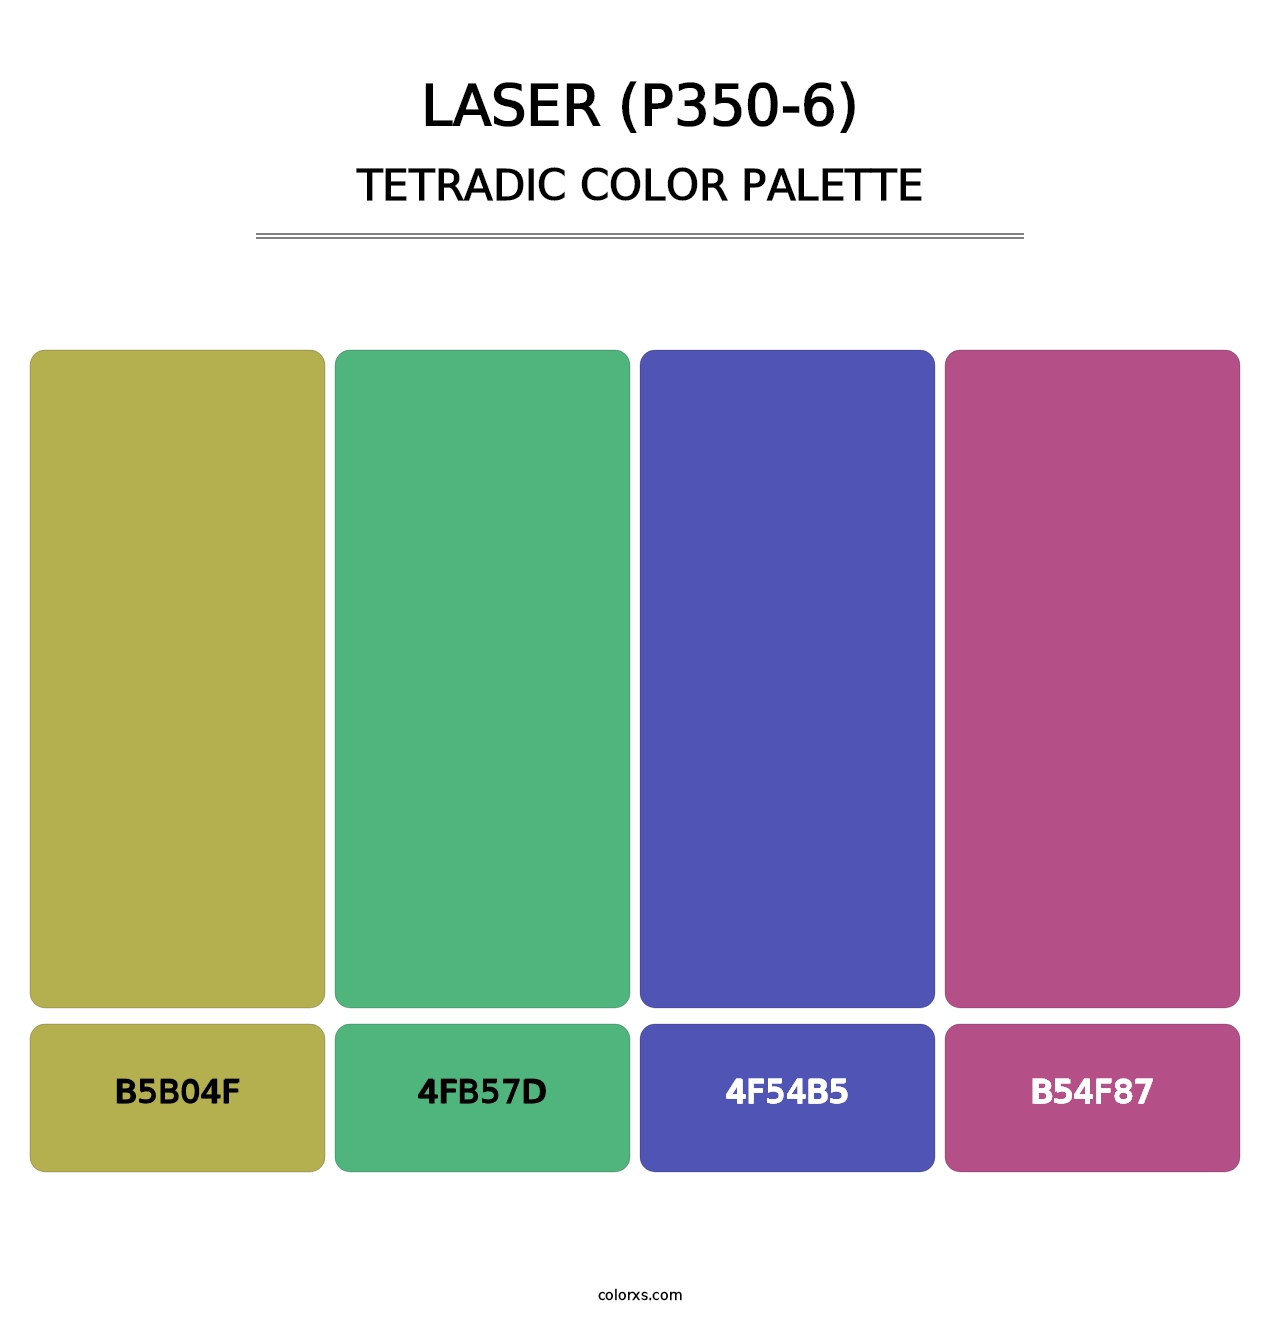 Laser (P350-6) - Tetradic Color Palette